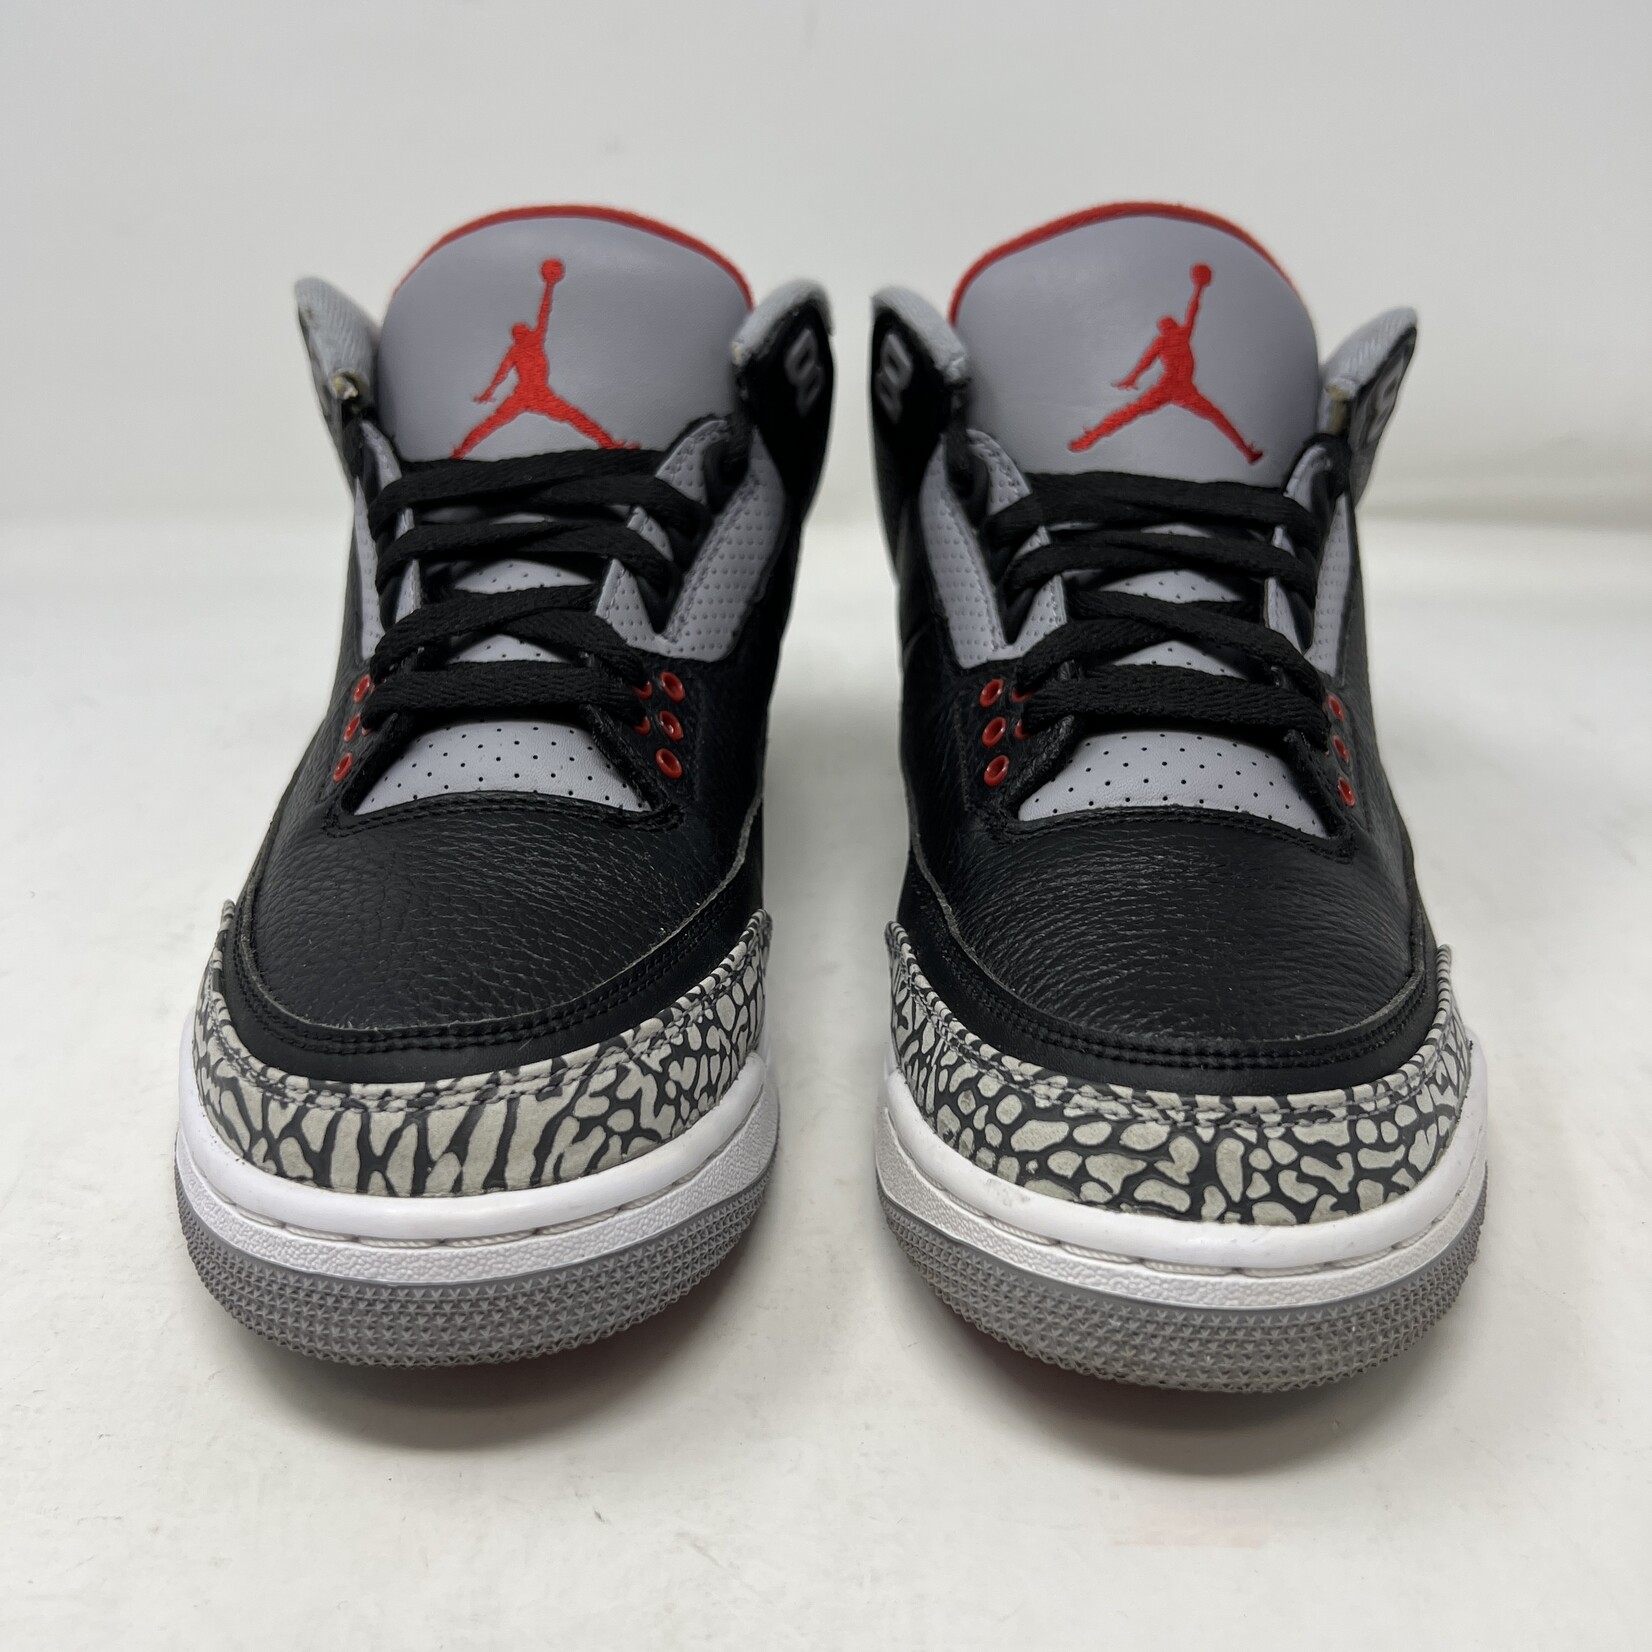 Jordan Jordan 3 Retro Black Cement (2018)